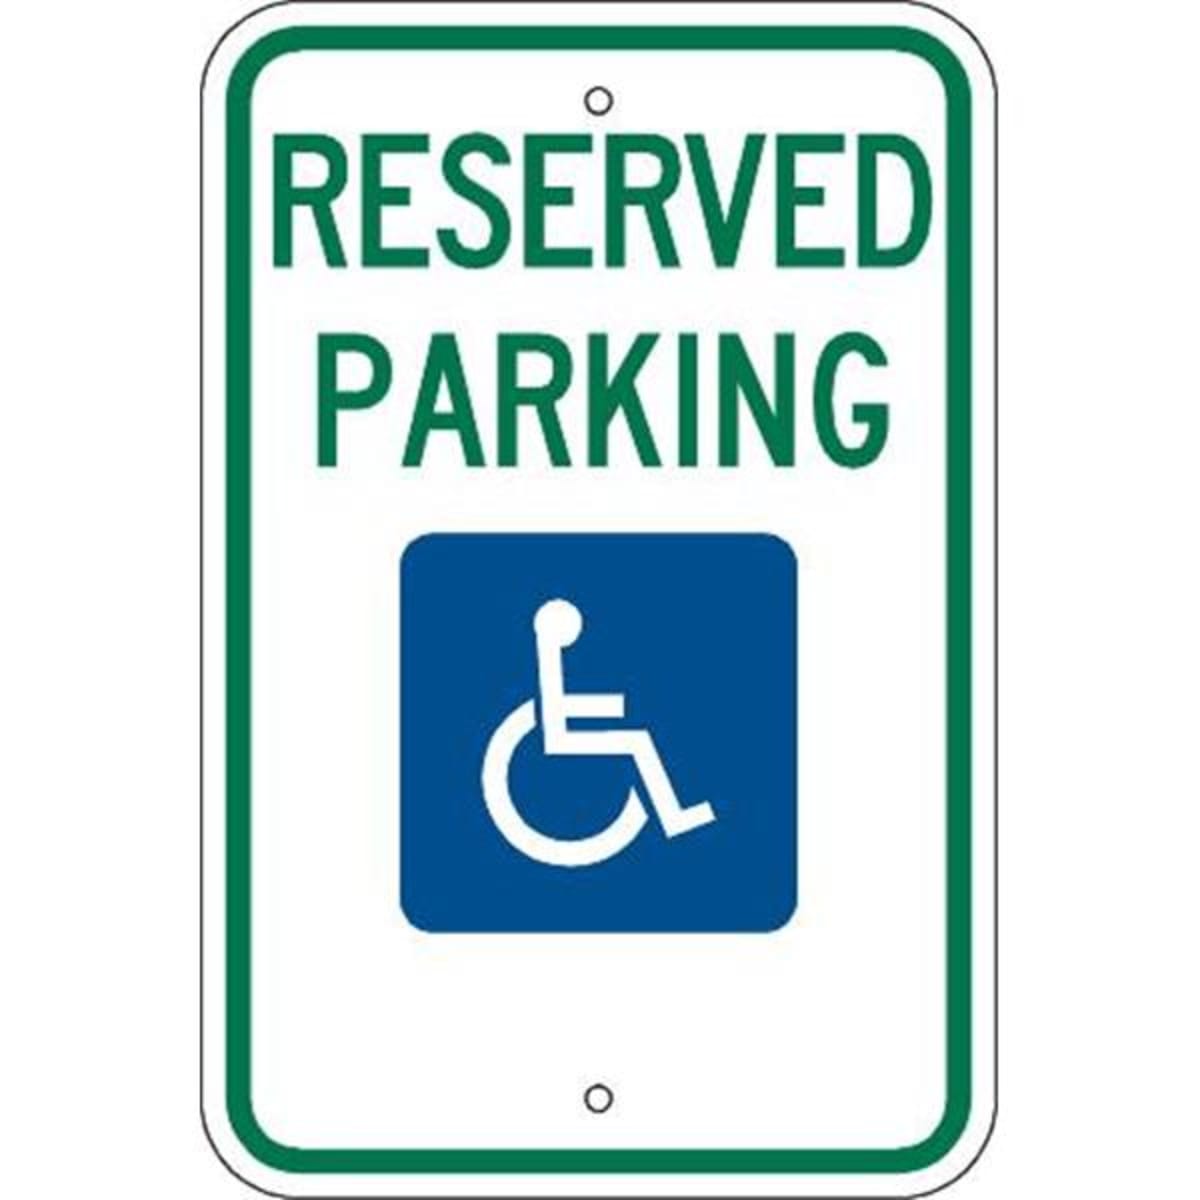 14 Width 10 Height LegendUnauthorized Parking Mandates $100 Fee Brady 127481 Handicapped Parking Sign Black on White 